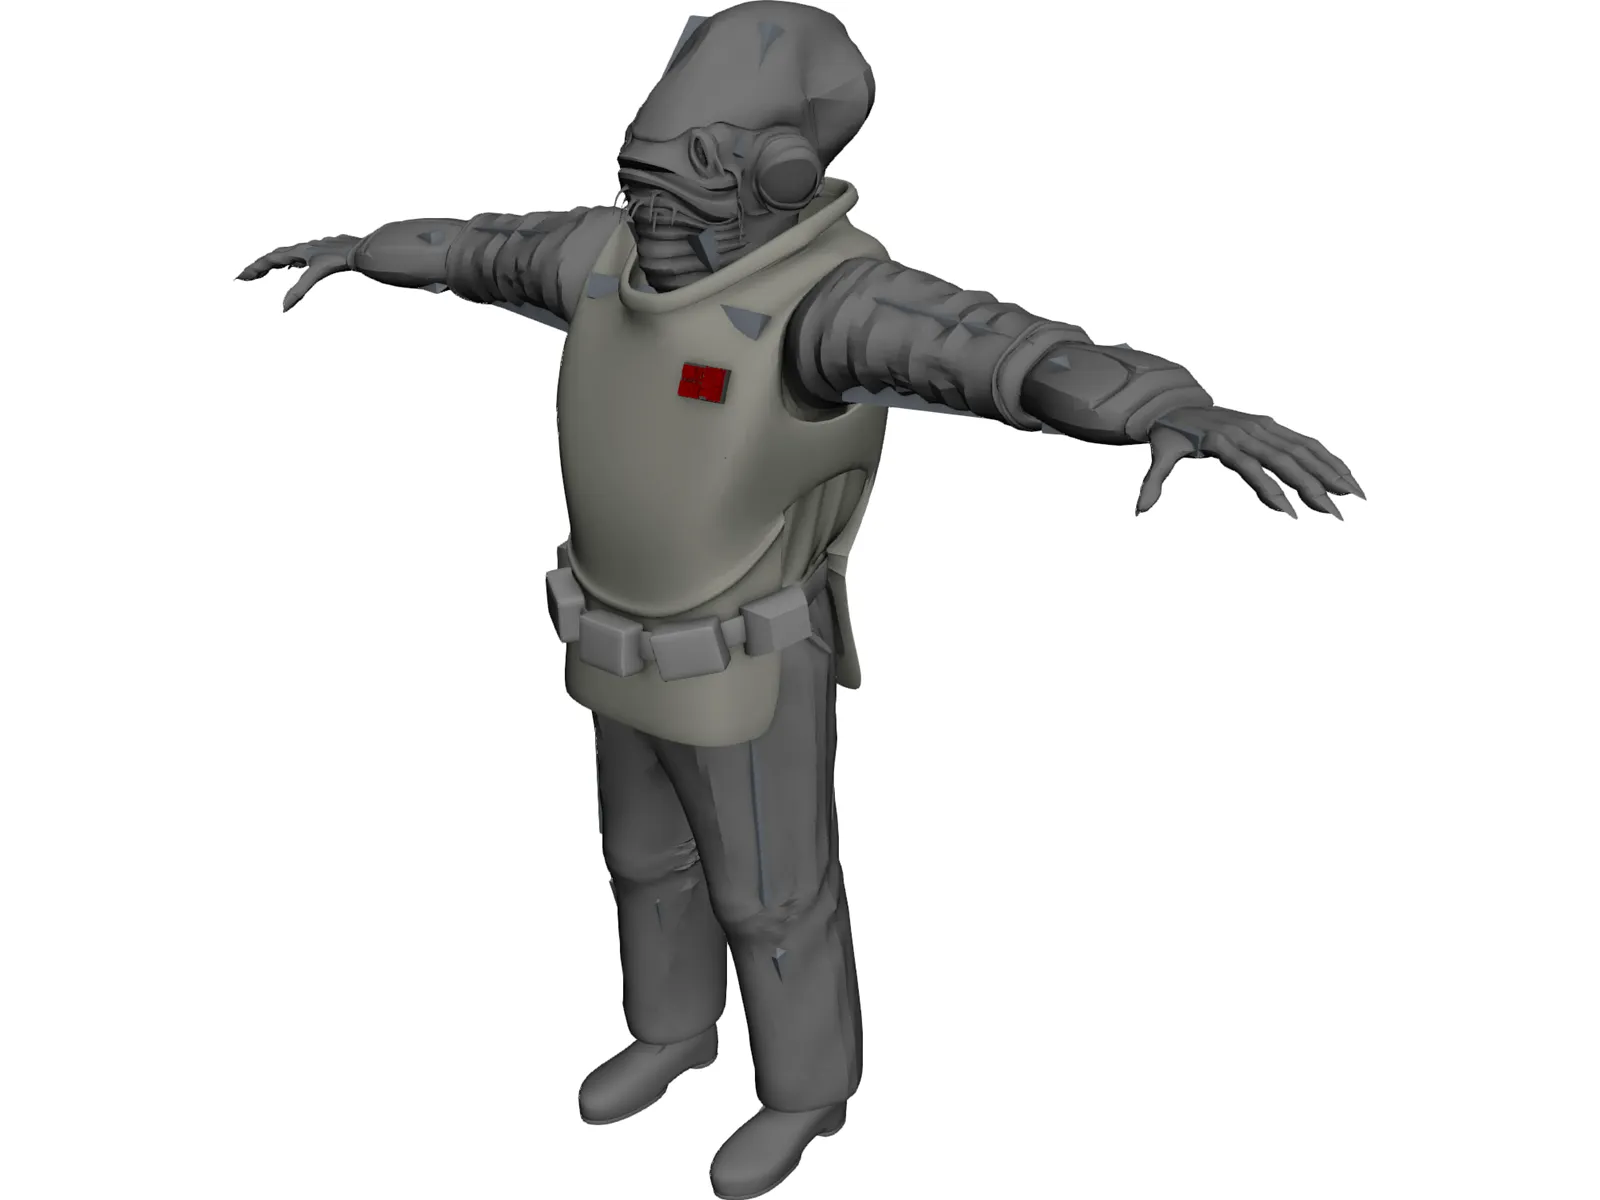 Star Wars Character 3D Model